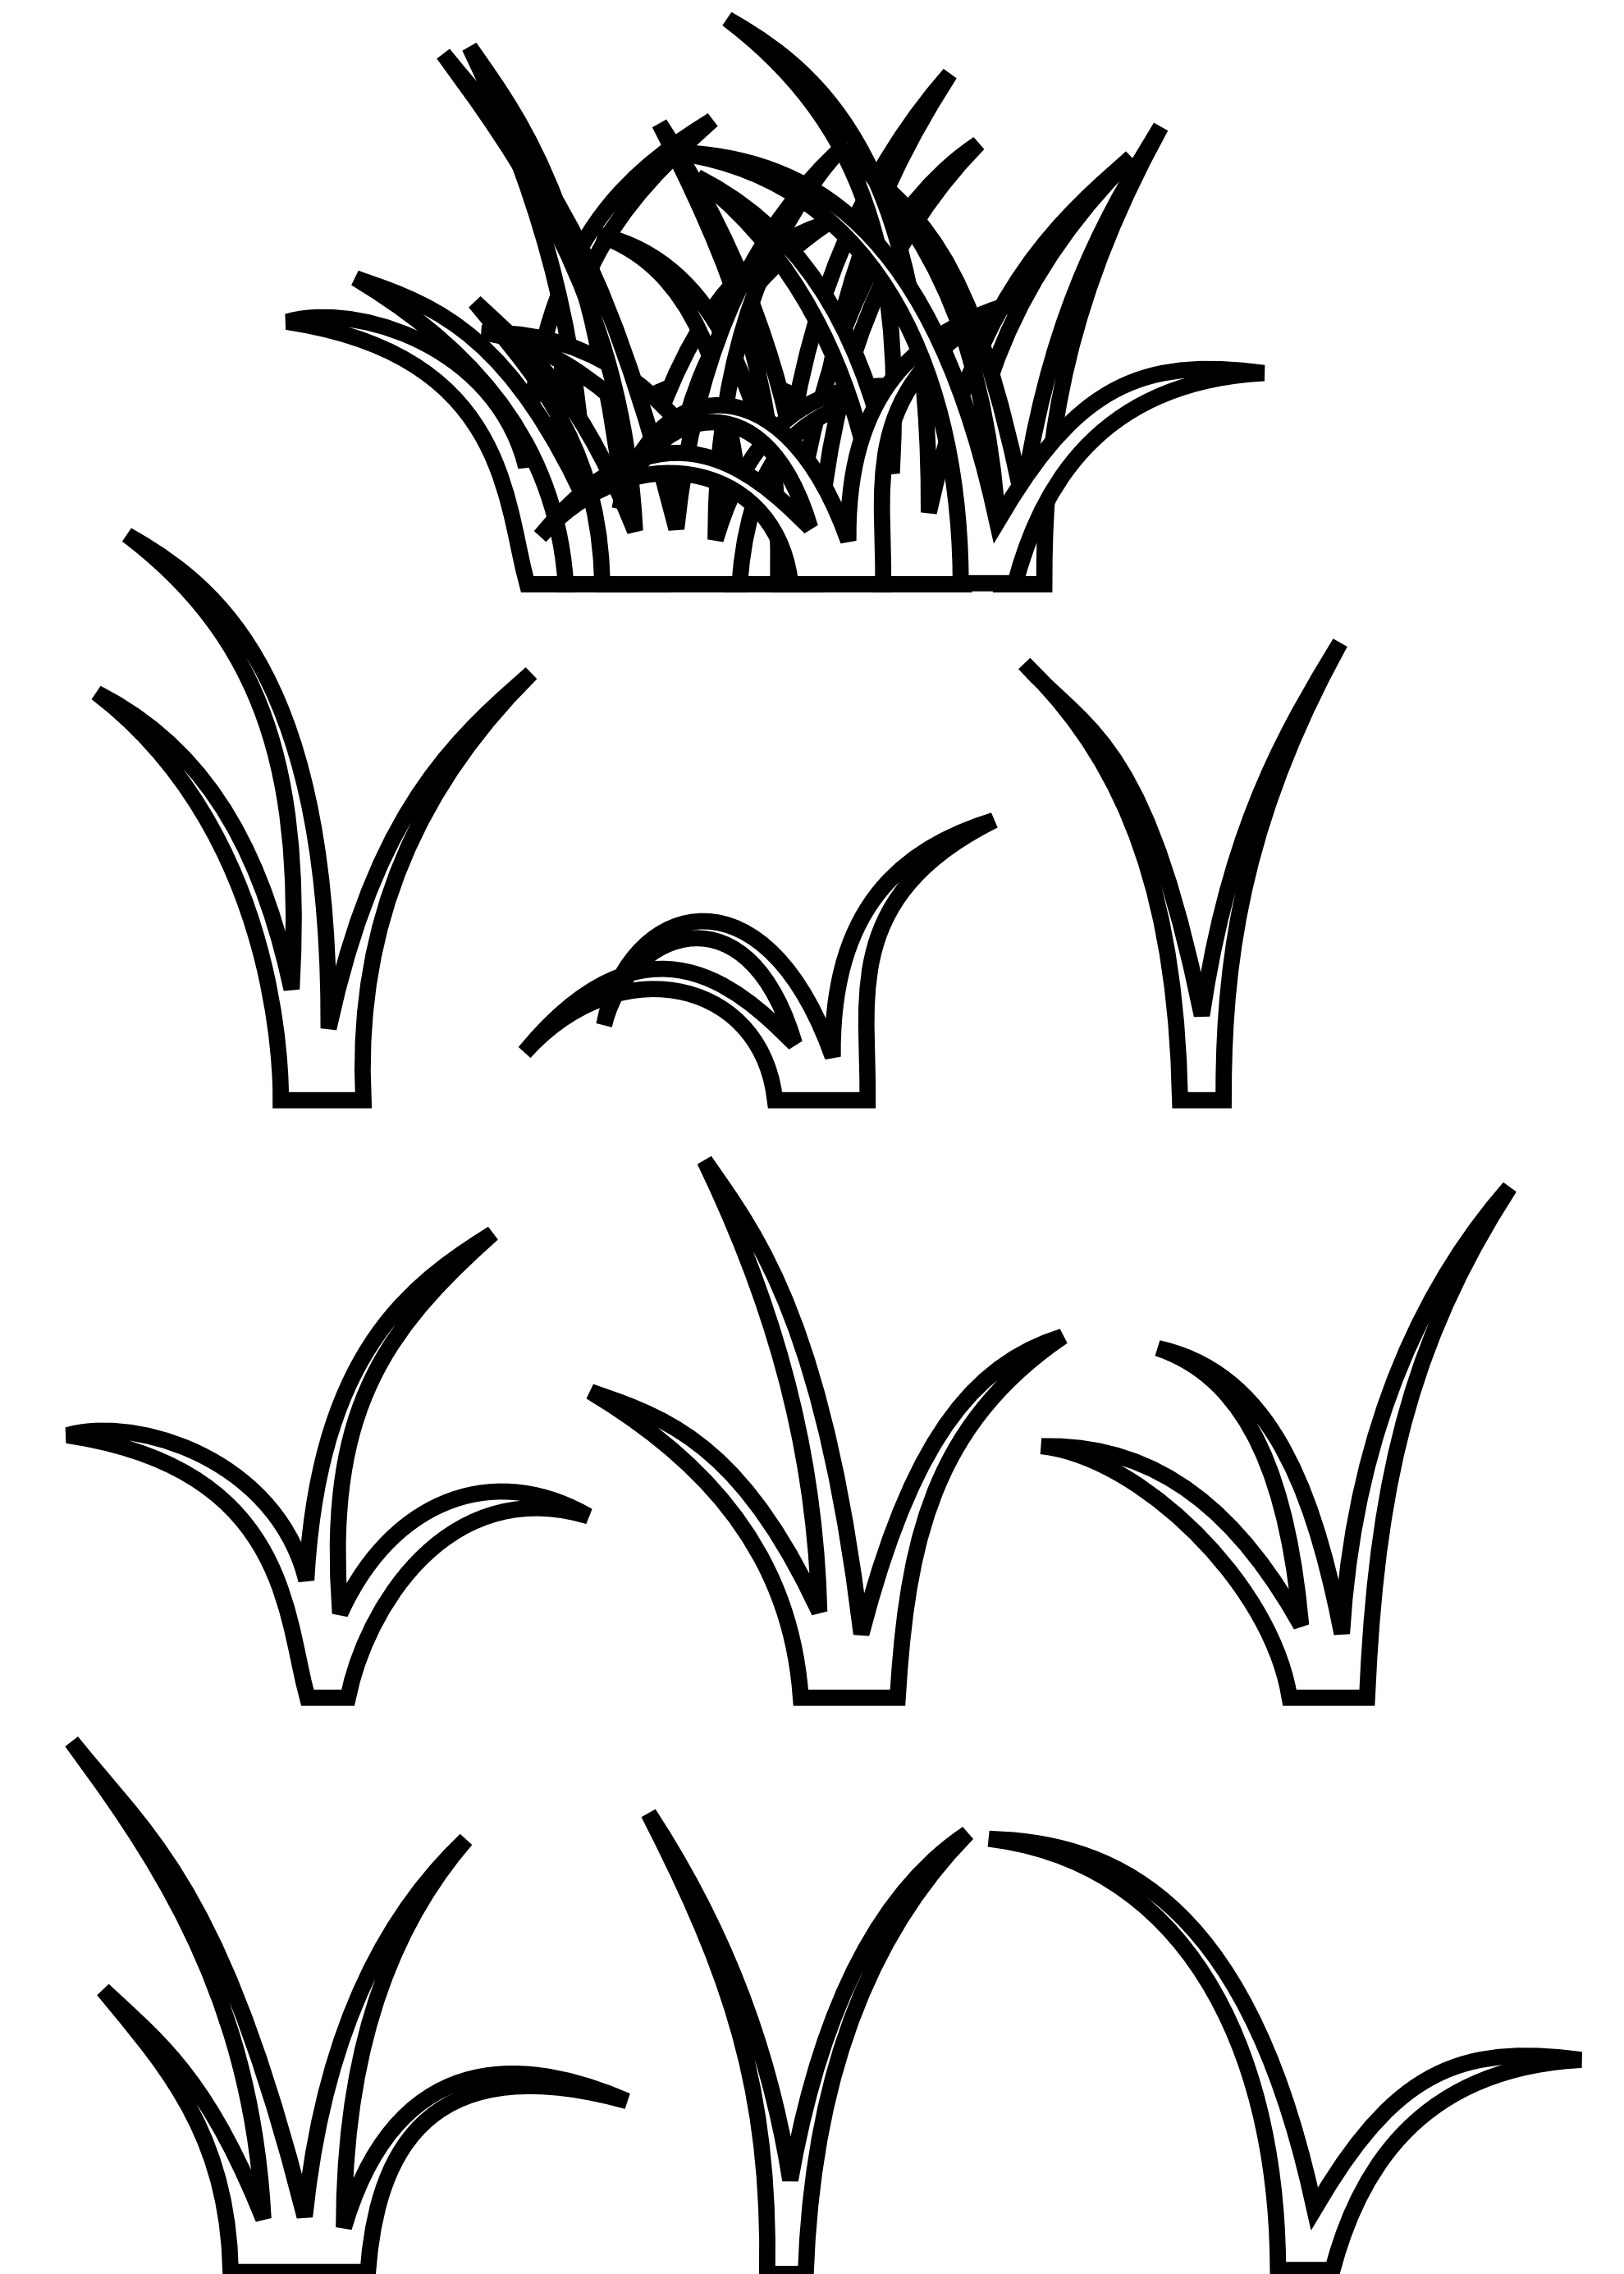 Grass clipart illustration. Black and white panda